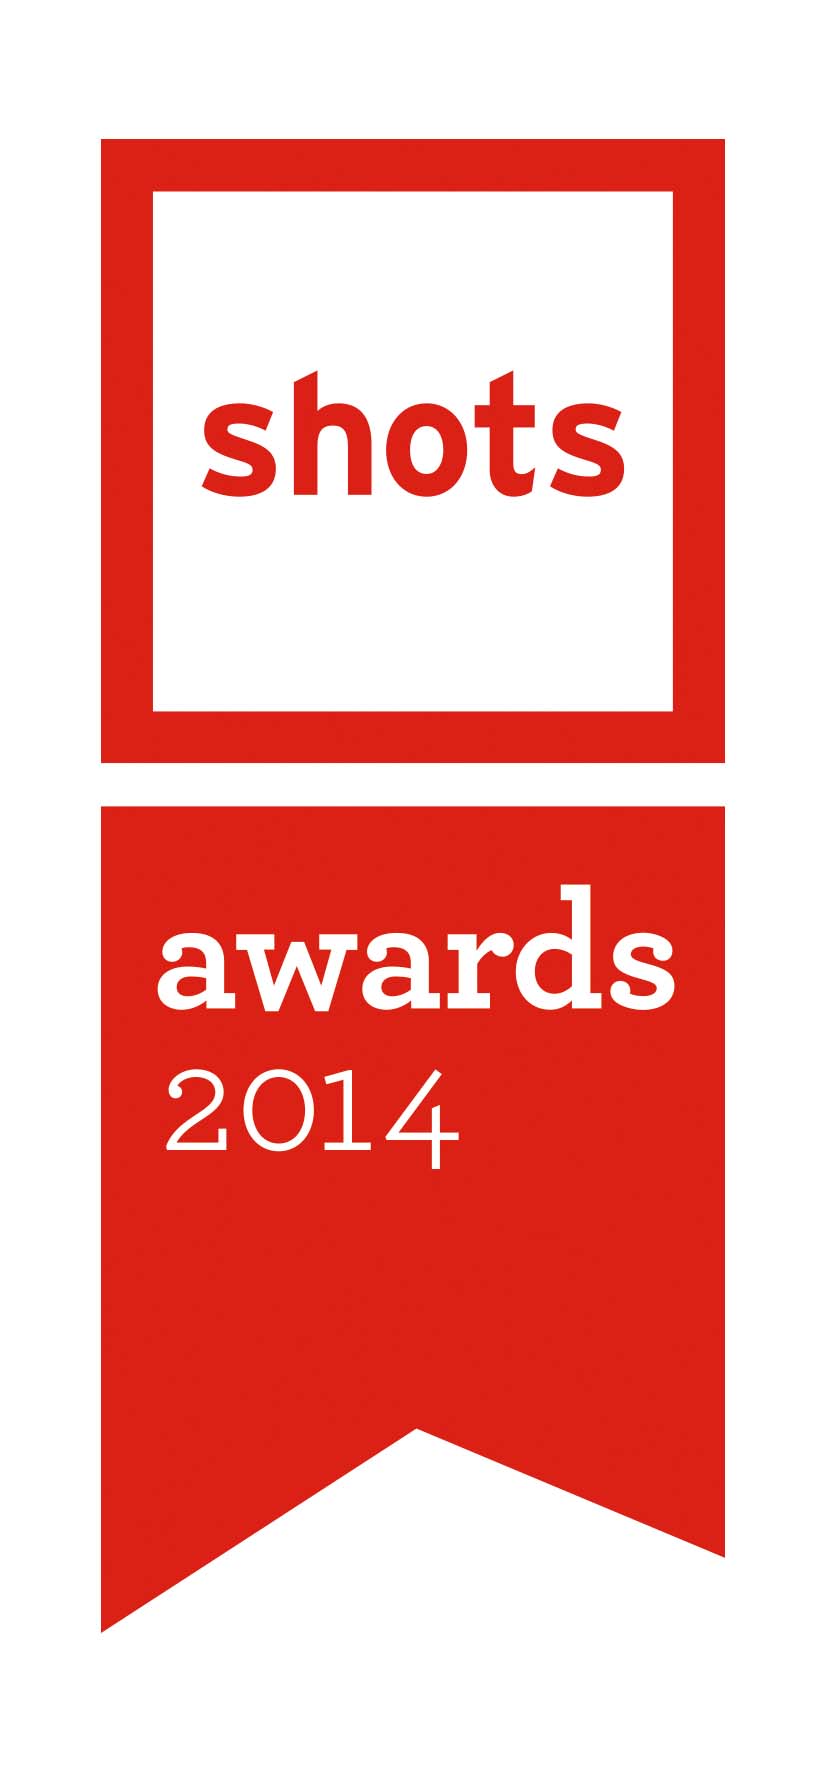 Shots Awards ribbon logo_2014